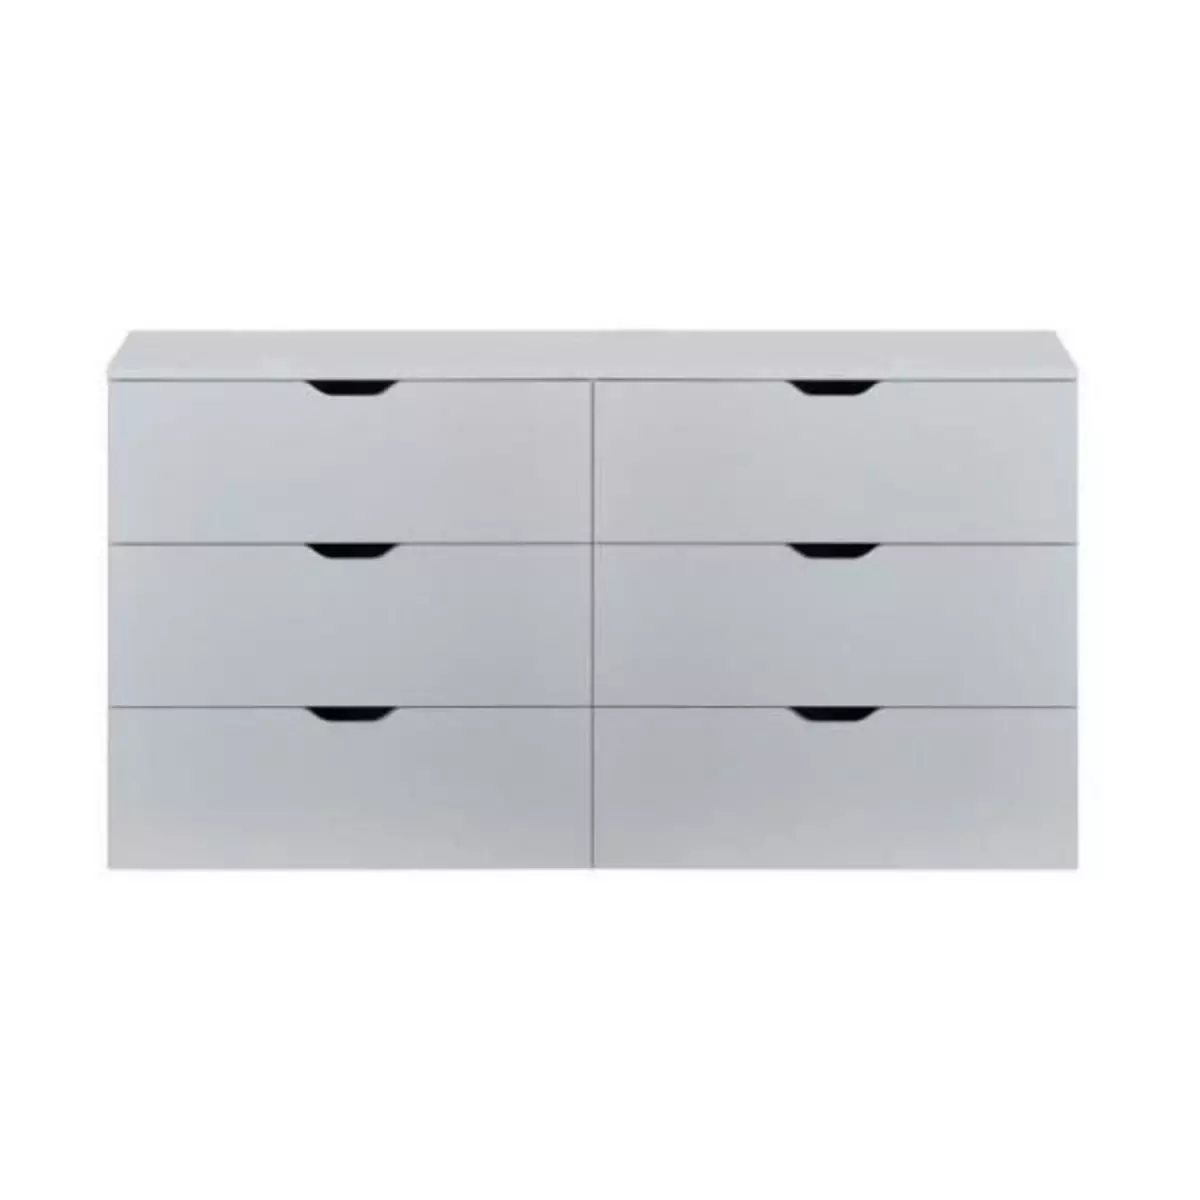  Commode - Meuble  Basix - 6 tiroirs - Blanc mat - L 139 x P 40 x H 80 cm